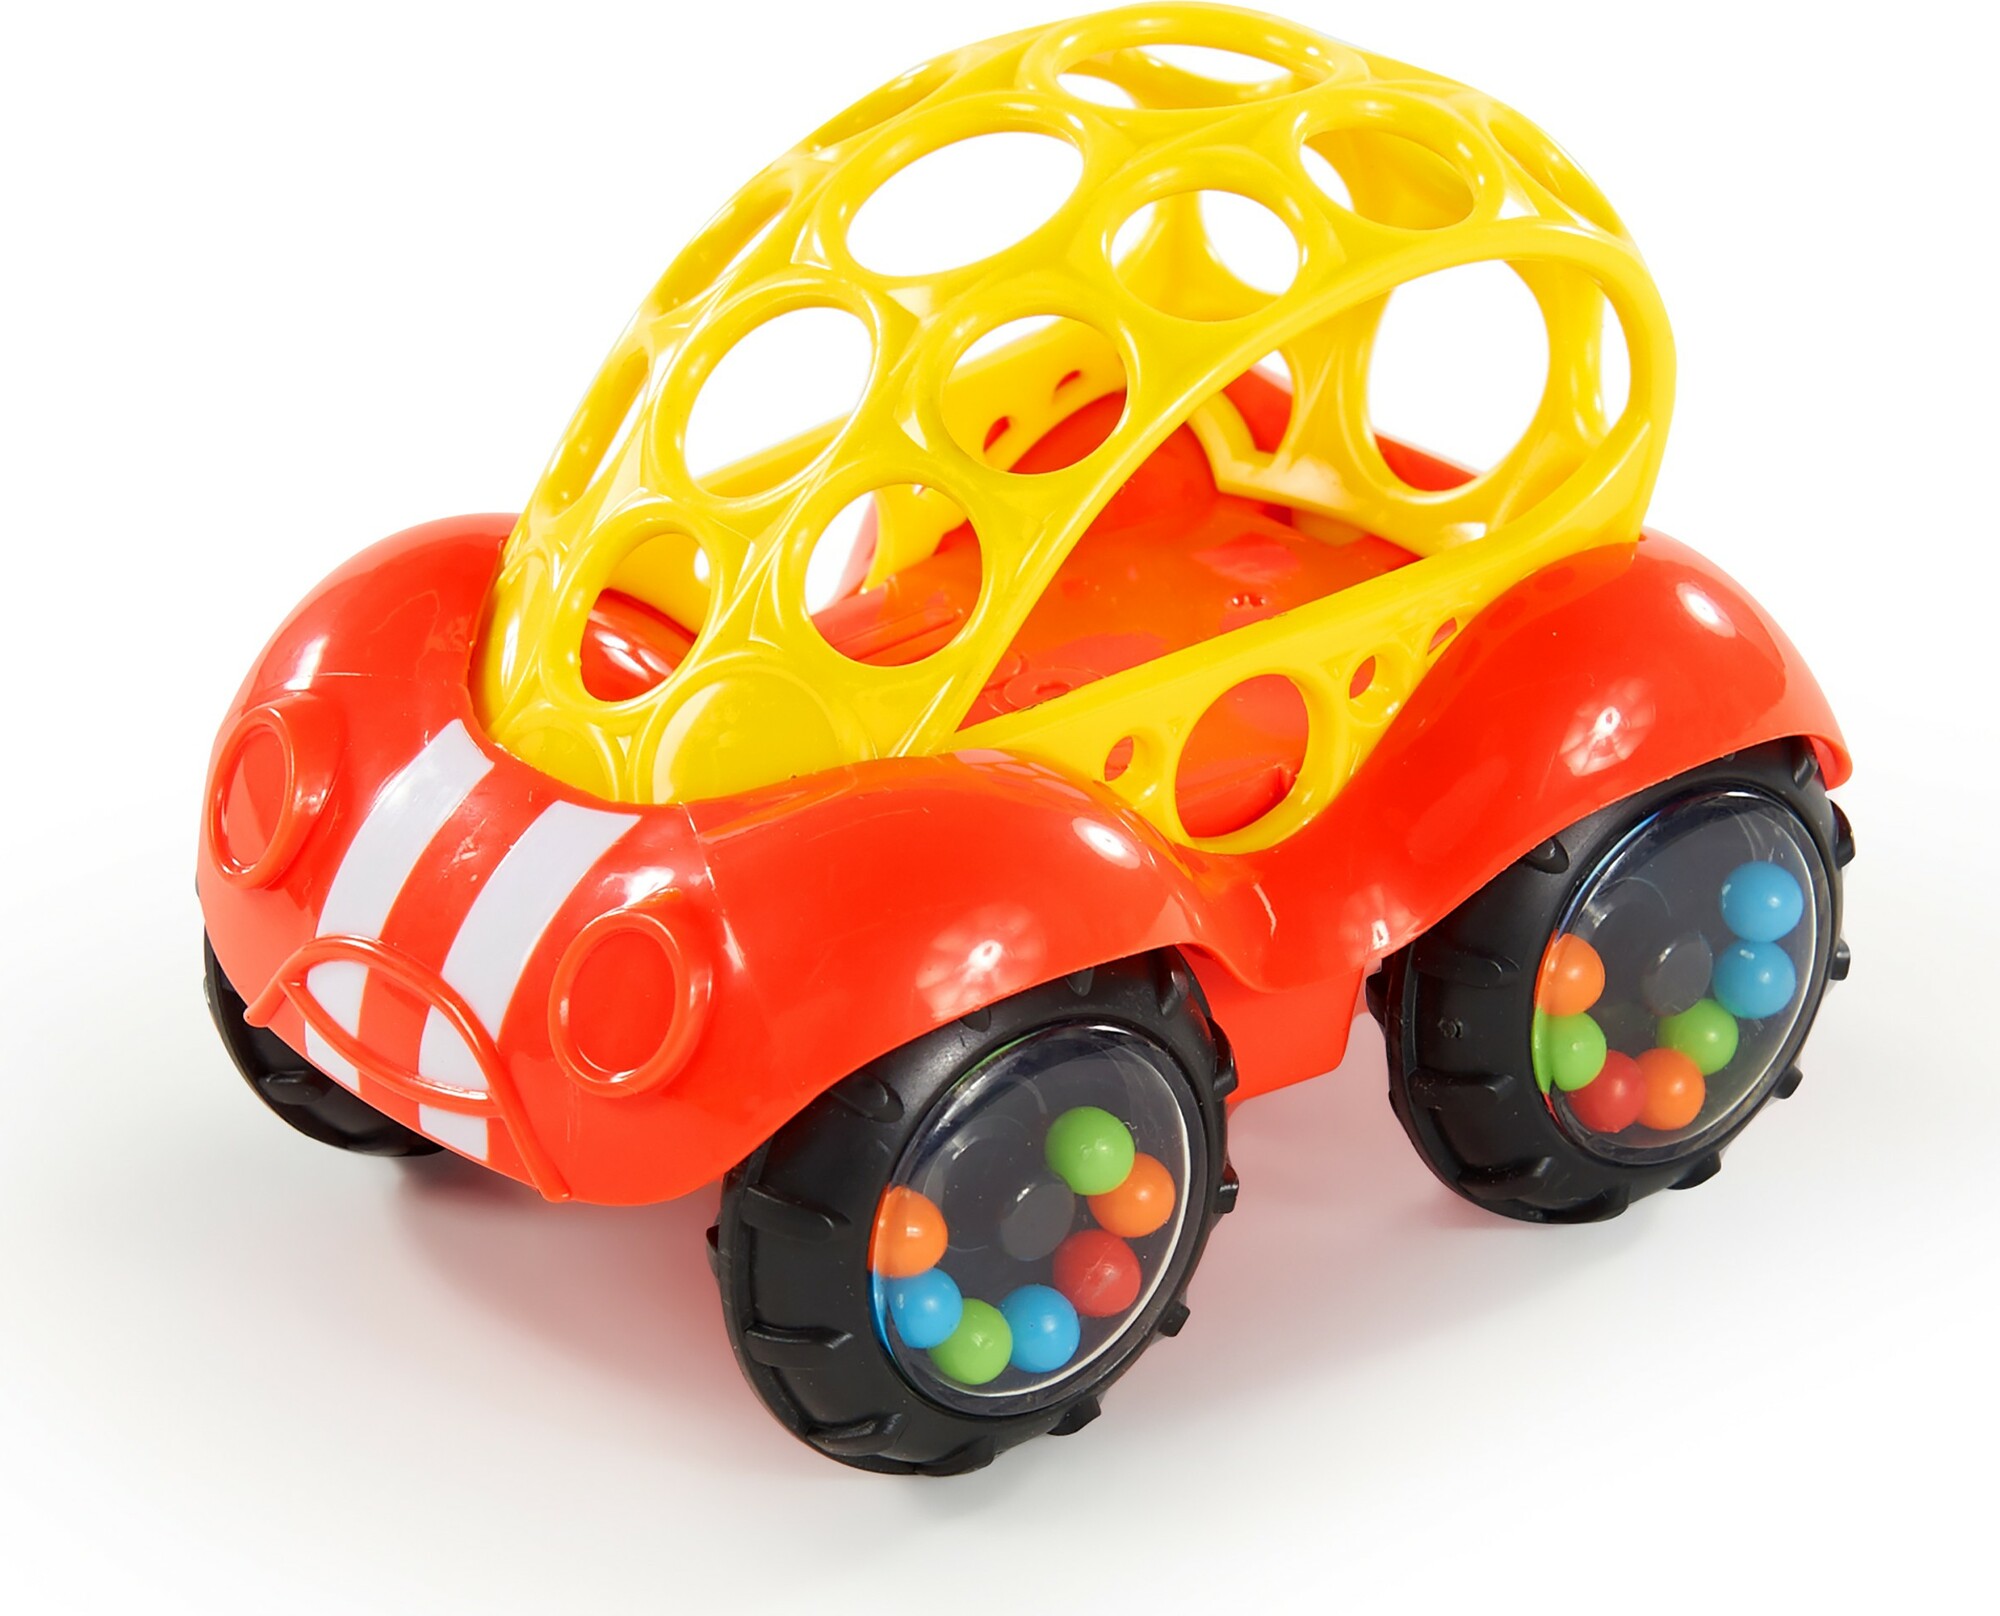 Hračka autíčko Rattle & Roll Oballo ™ červeno / žluté 3m +